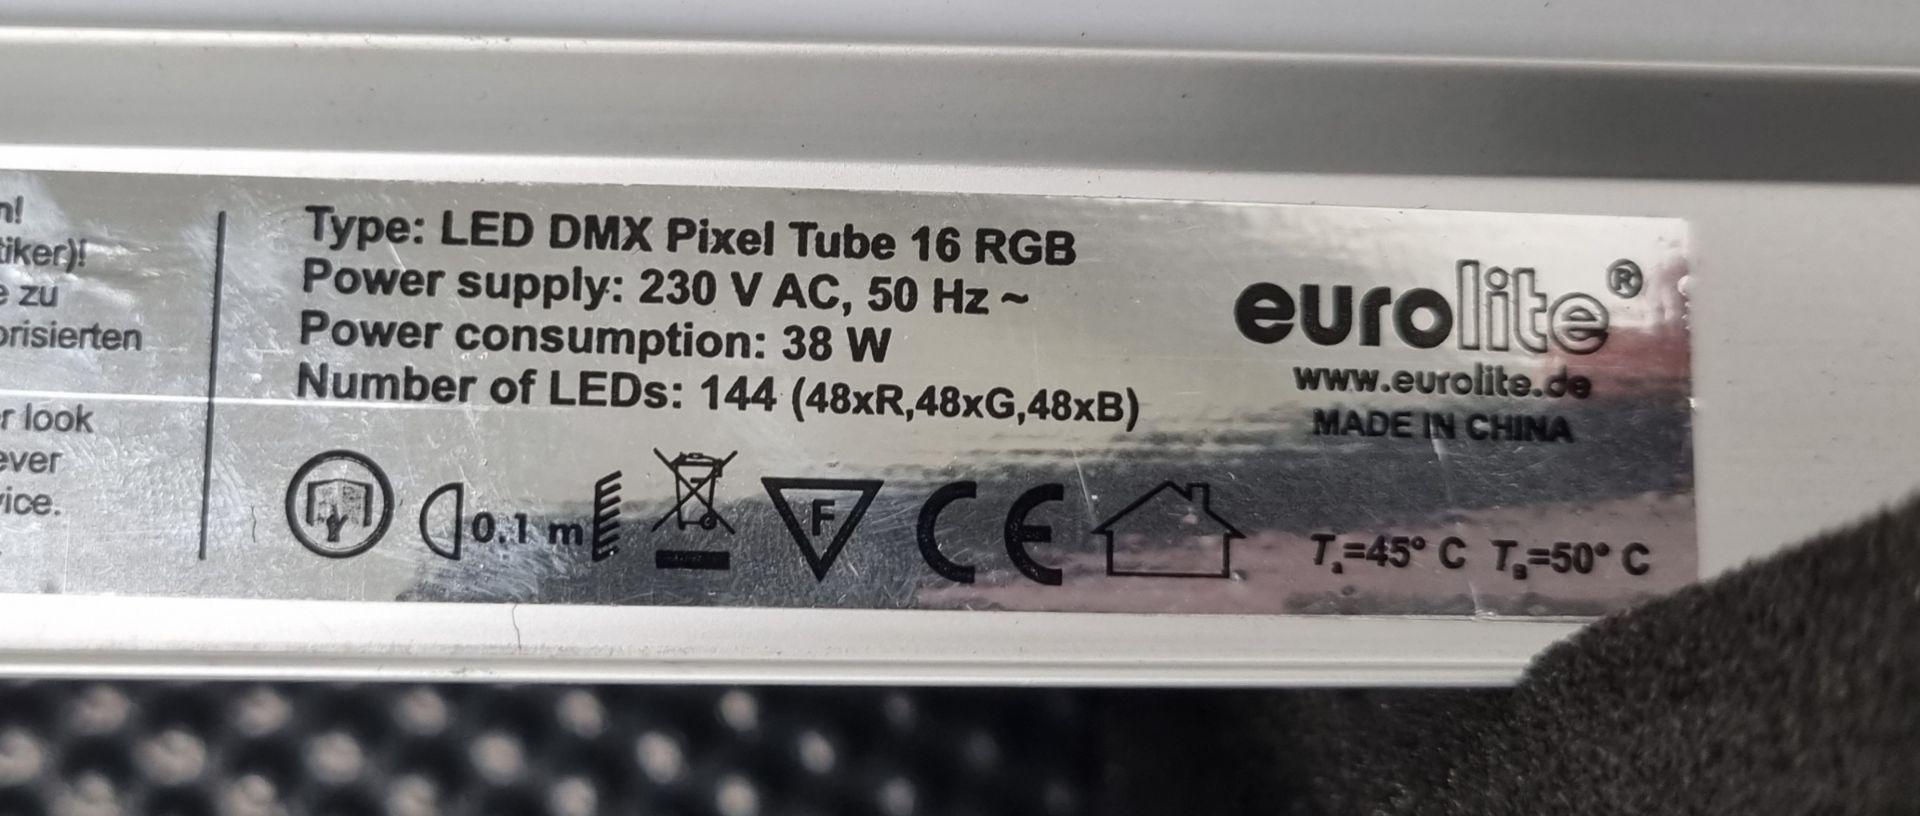 Flight case containing 24x Thomann eurolite 1m LED DMX pixel tubes 16RGB 144 LEDs - L1090 x W680 - Bild 3 aus 4